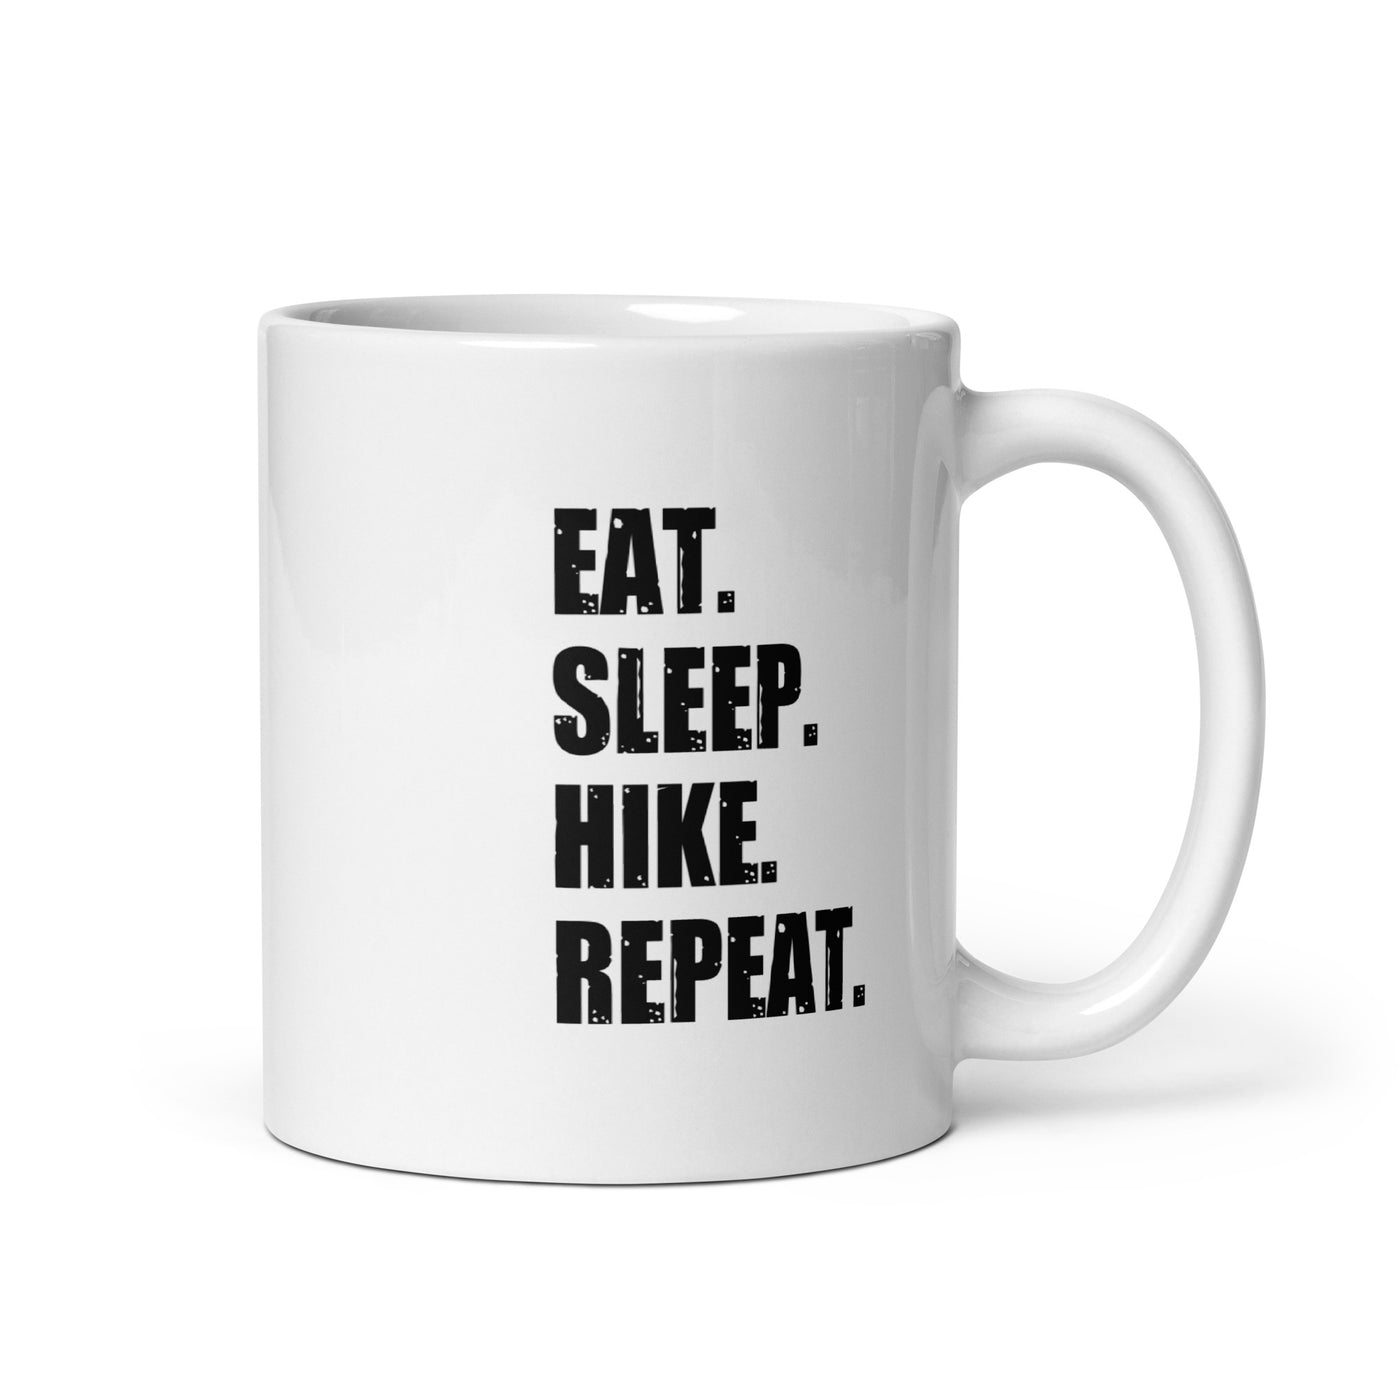 Eat Sleep Hike Repeat - Tasse wandern